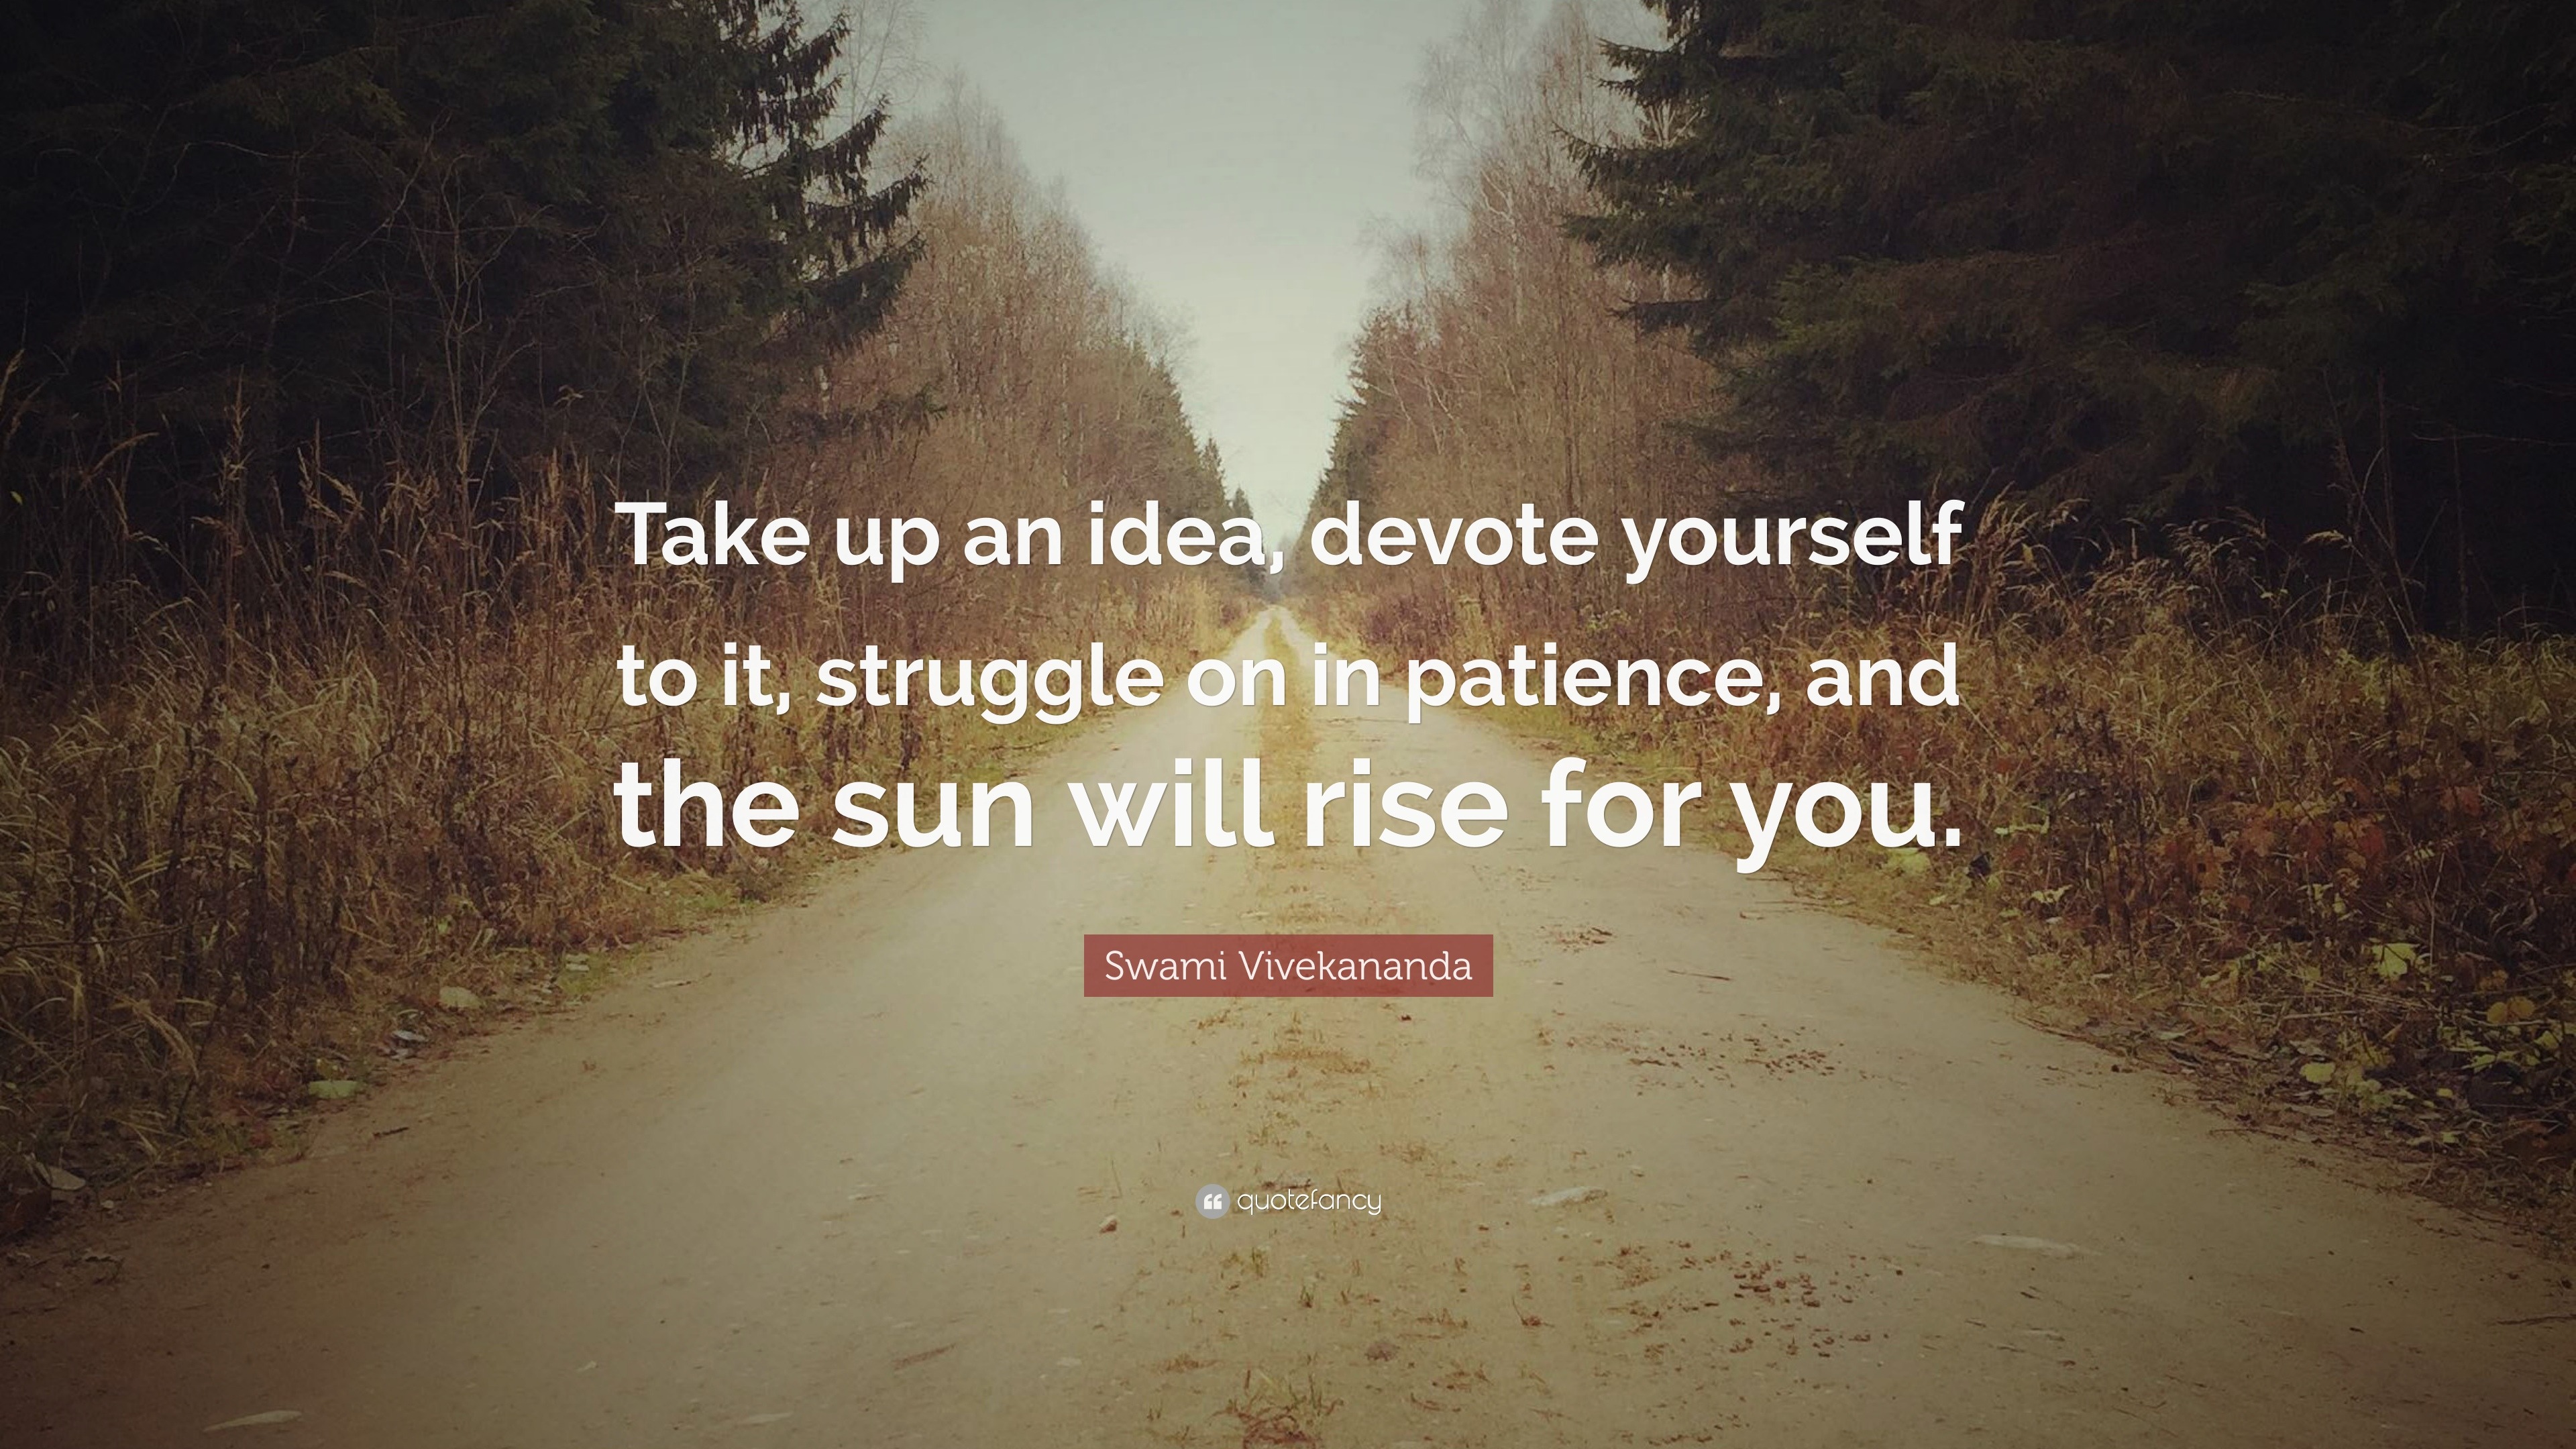 Swami Vivekananda Quote “Take up an idea devote yourself to it struggle